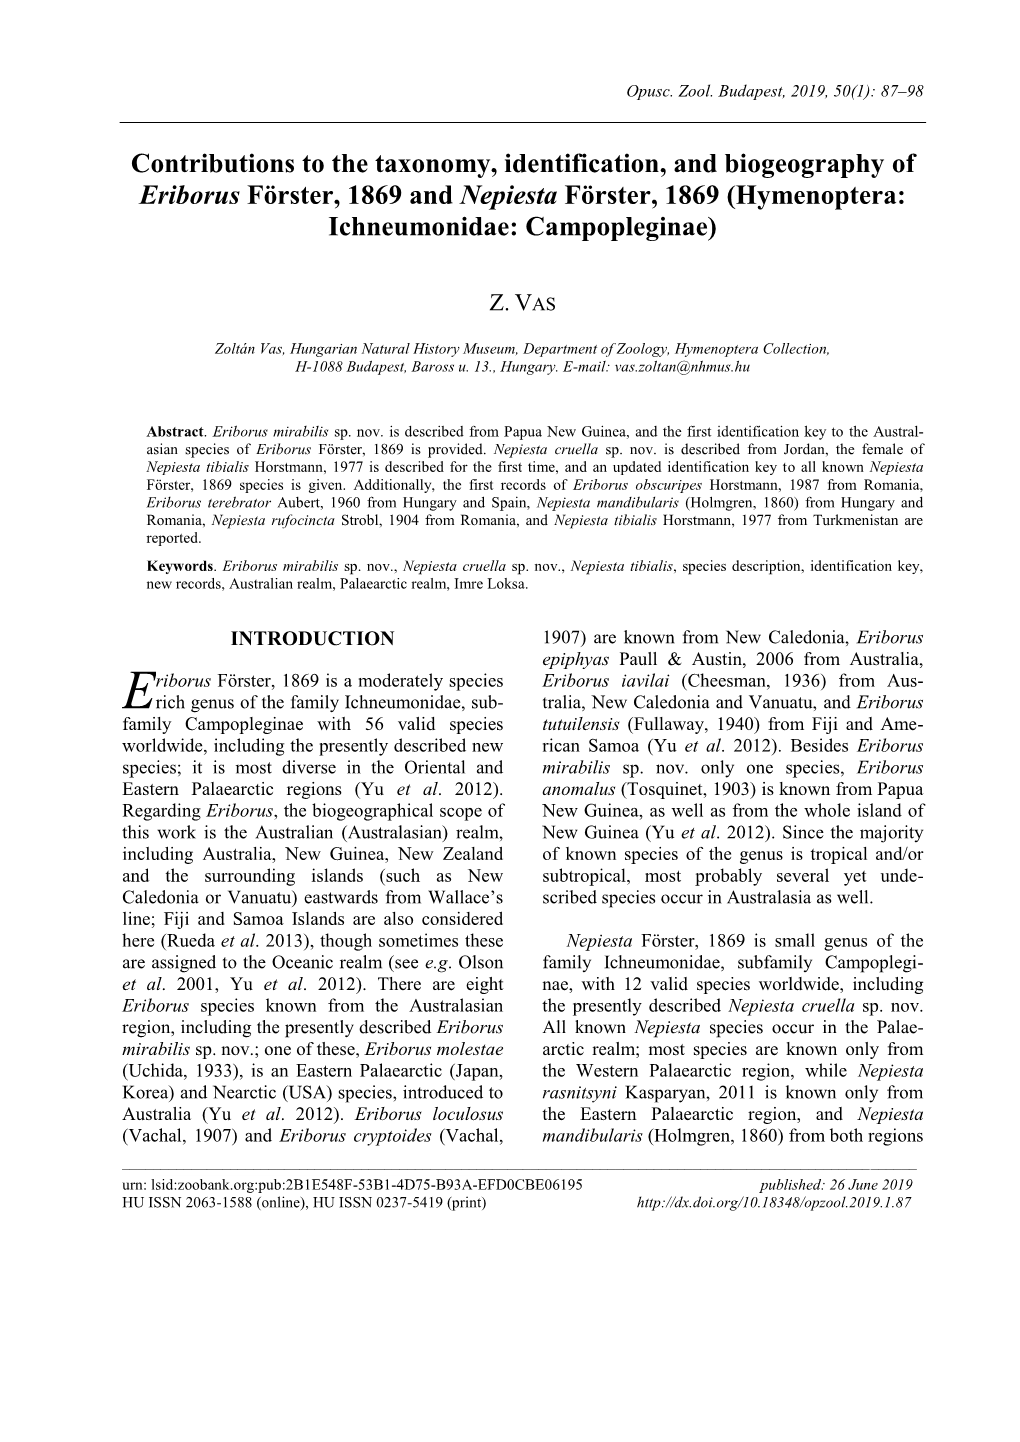 Contributions to the Taxonomy, Identification, and Biogeography of Eriborus Förster, 1869 and Nepiesta Förster, 1869 (Hymenoptera: Ichneumonidae: Campopleginae)